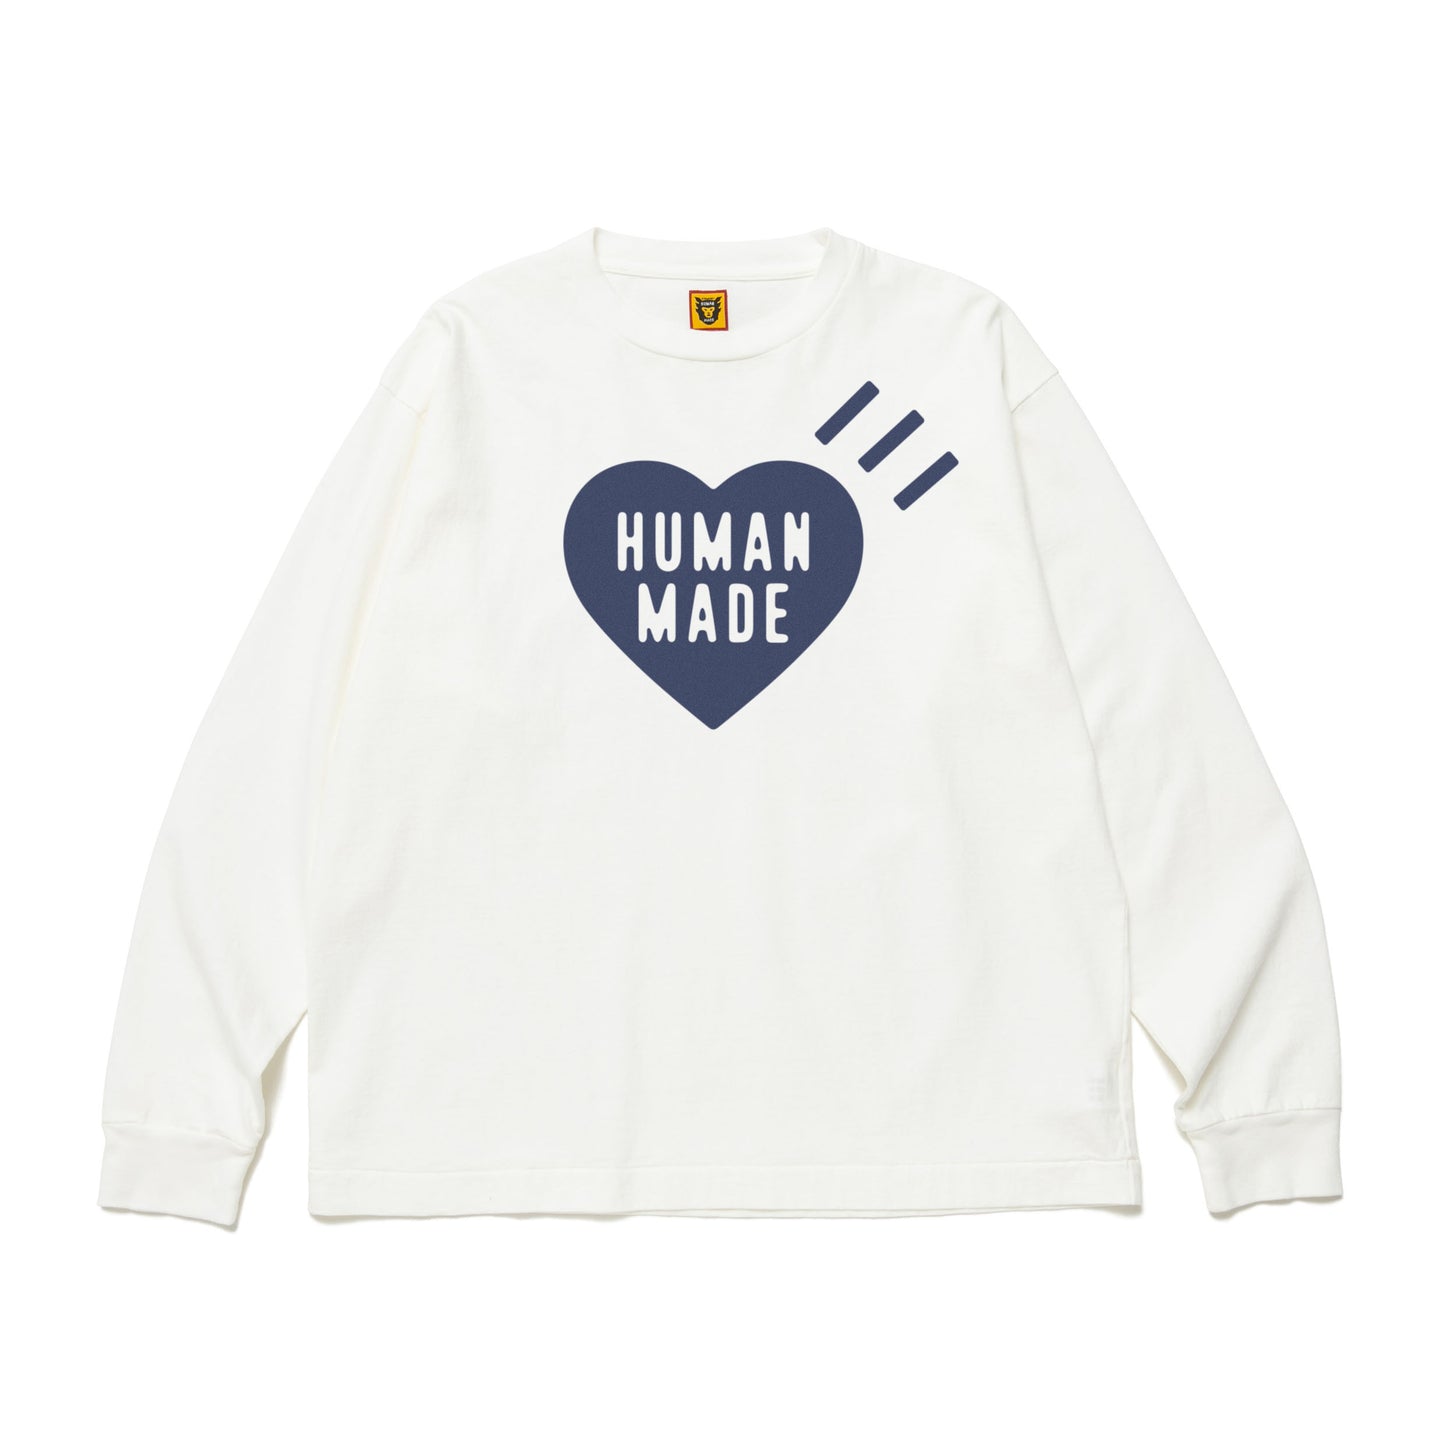 HUMAN MADE GRAPHIC T-SHIRT #8